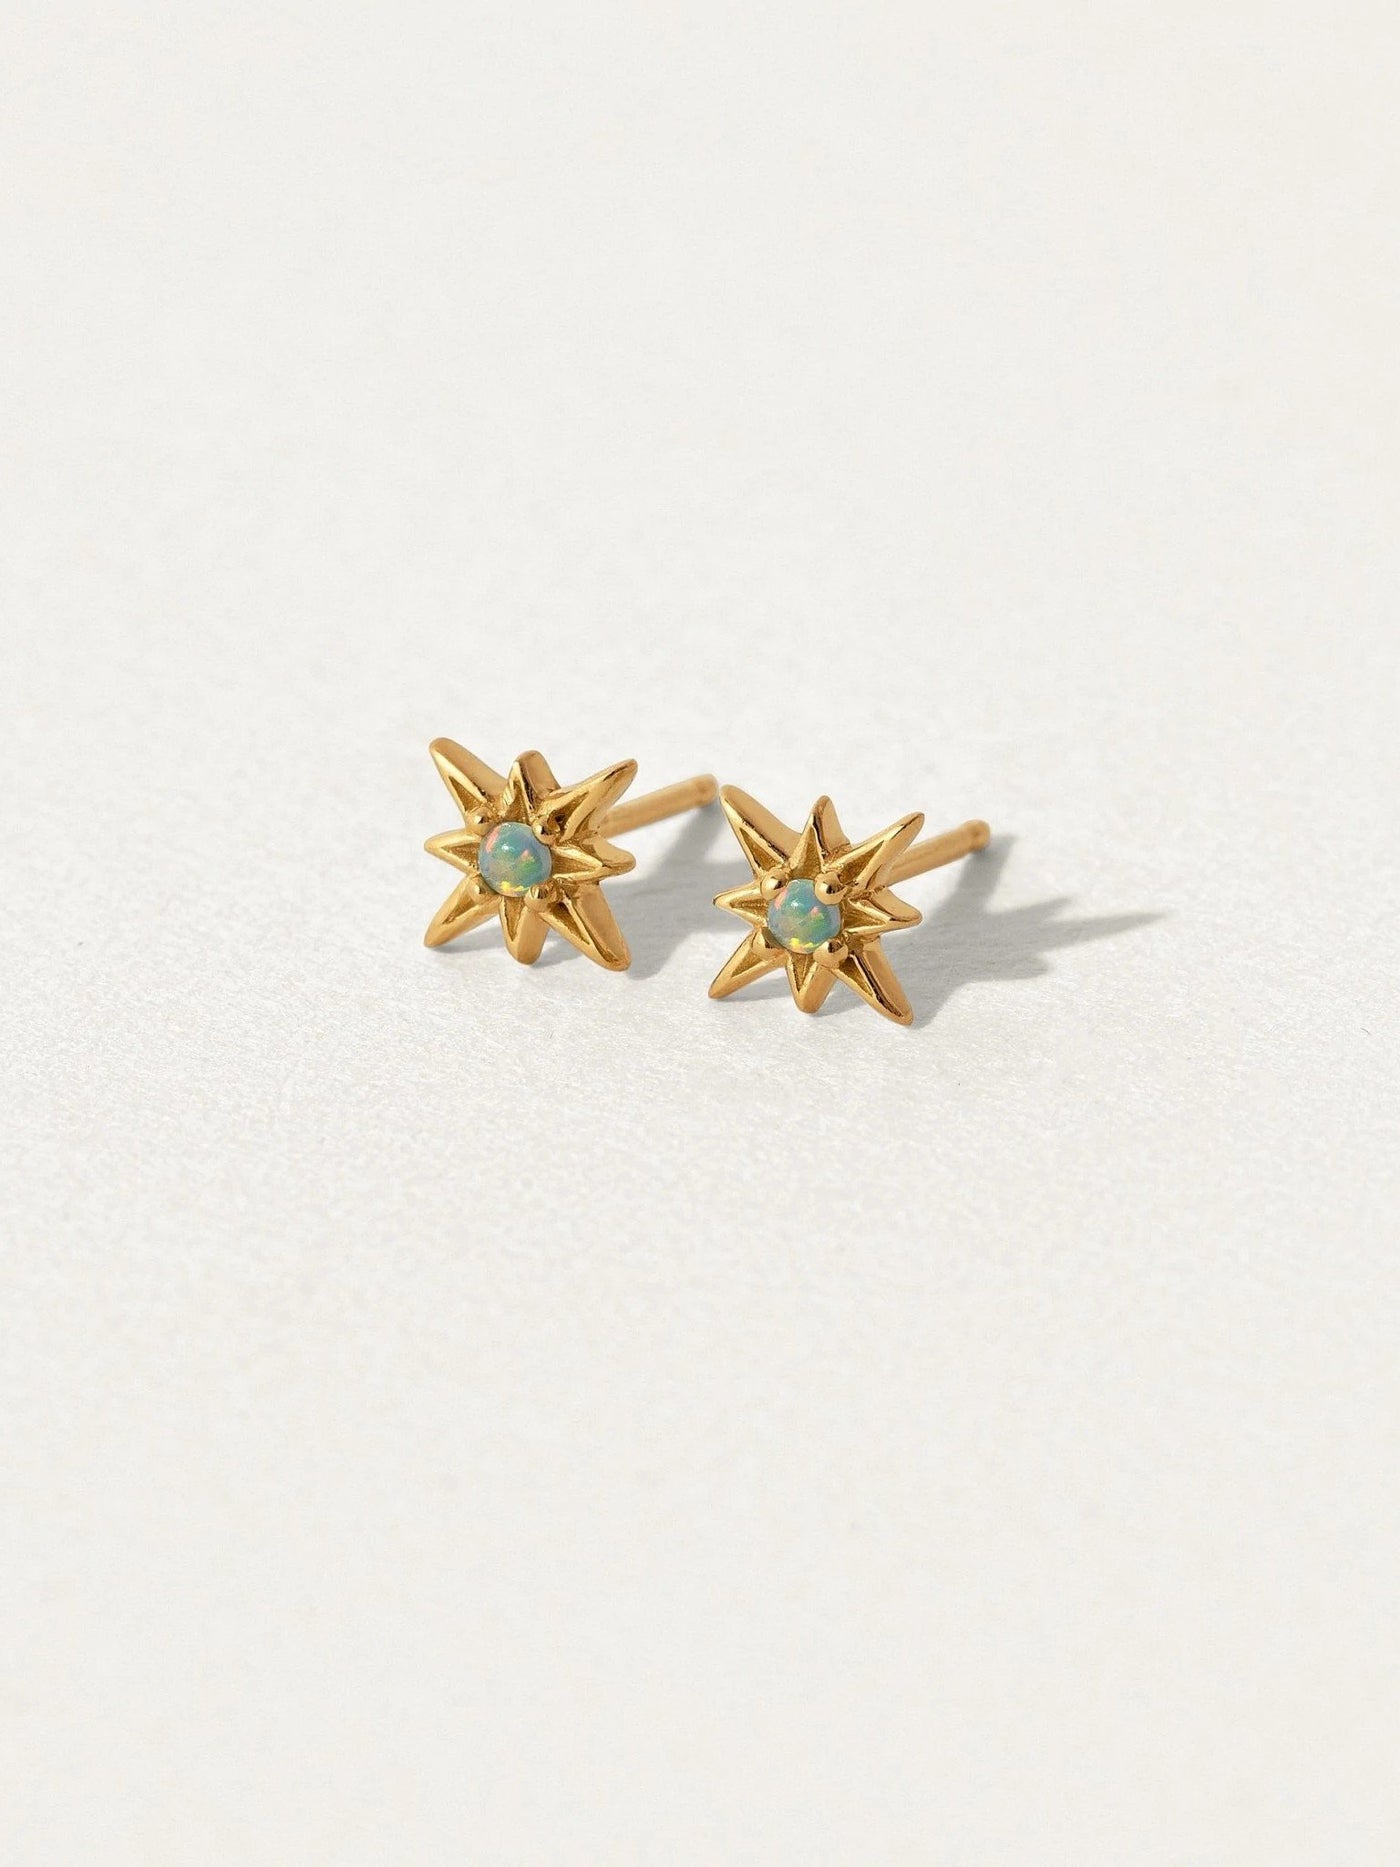 Olympia Sterling Silver Starburst Stud Earrings Set - 24K Gold PlatedAnniversary GiftBackUpItemsLunai Jewelry